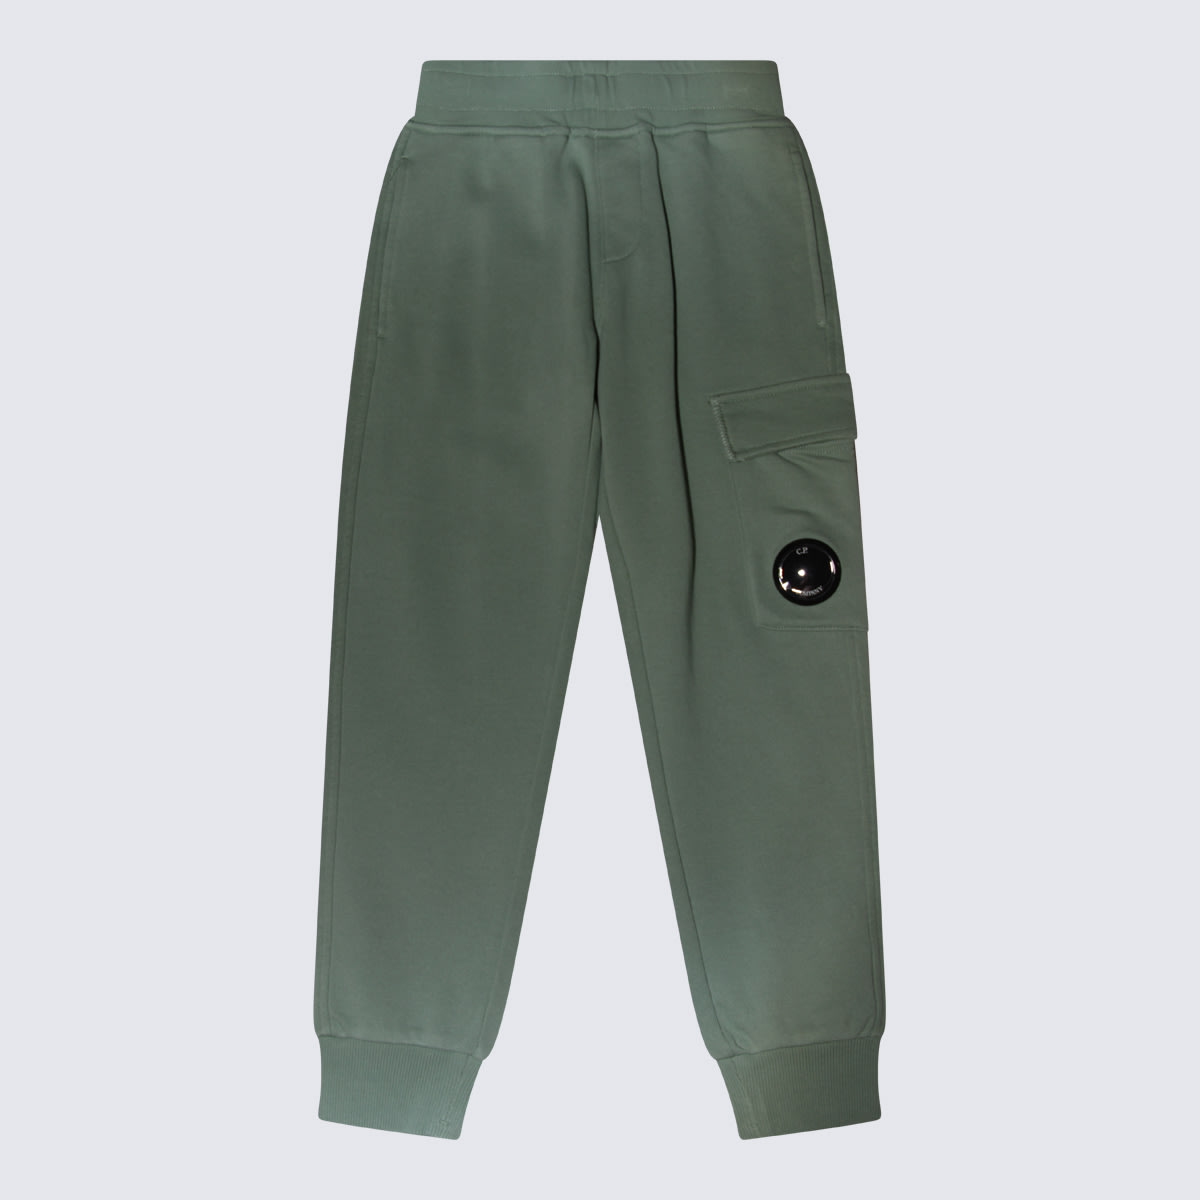 C.p. Company Kids' Green Cotton Pants